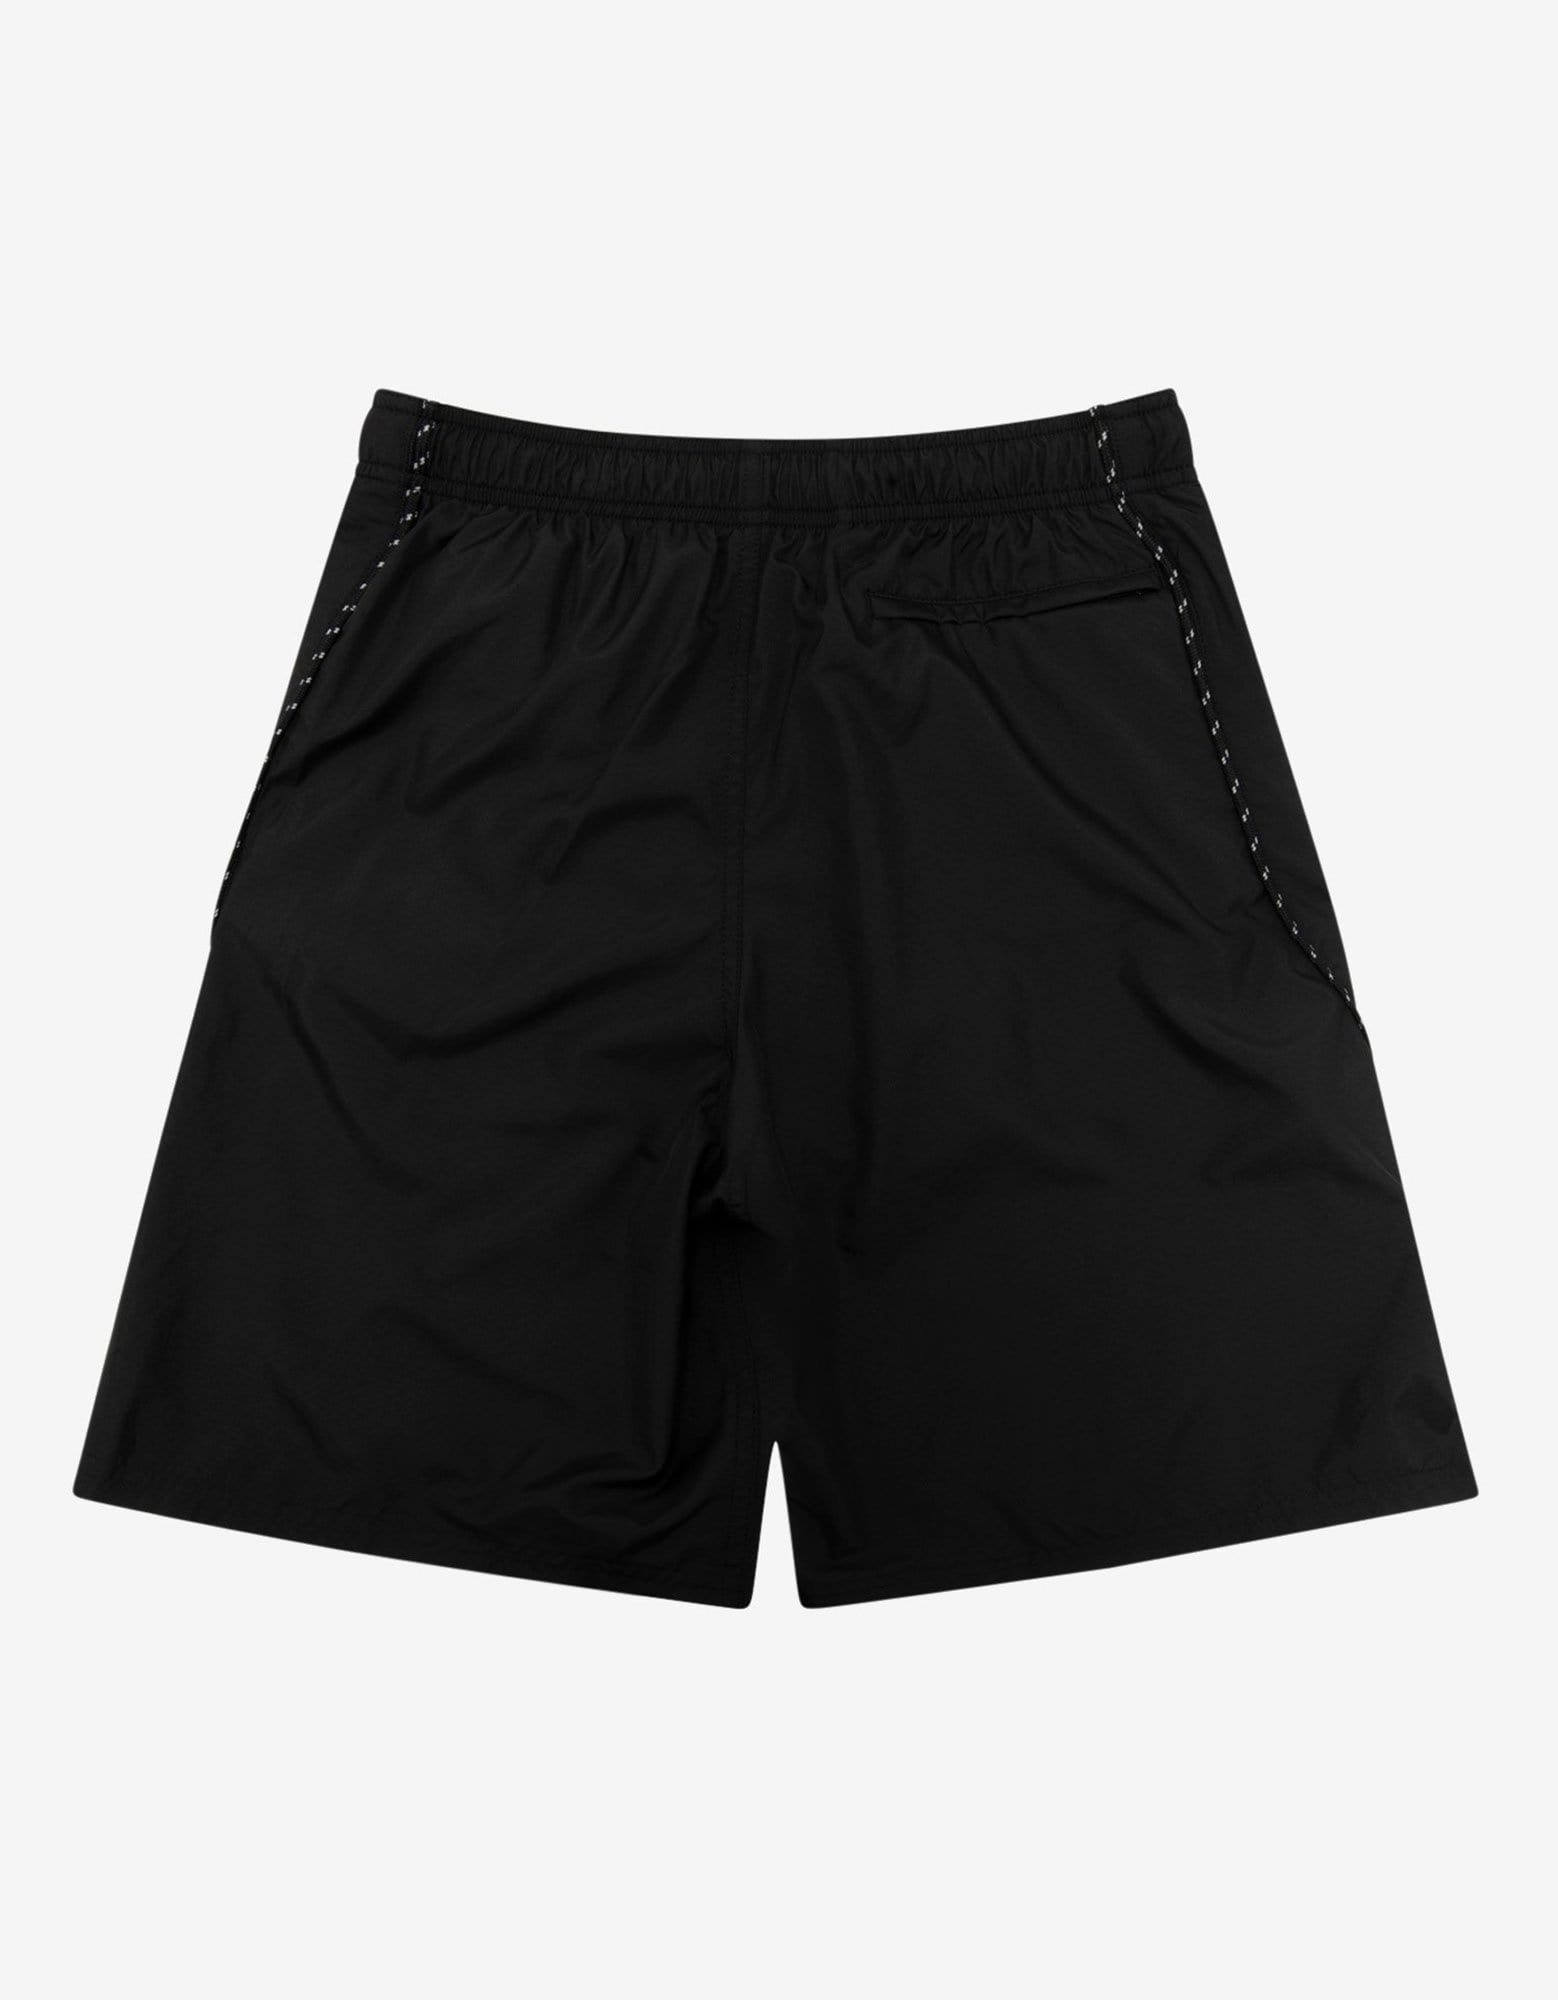 Black Lace Detail Swim Shorts - 2